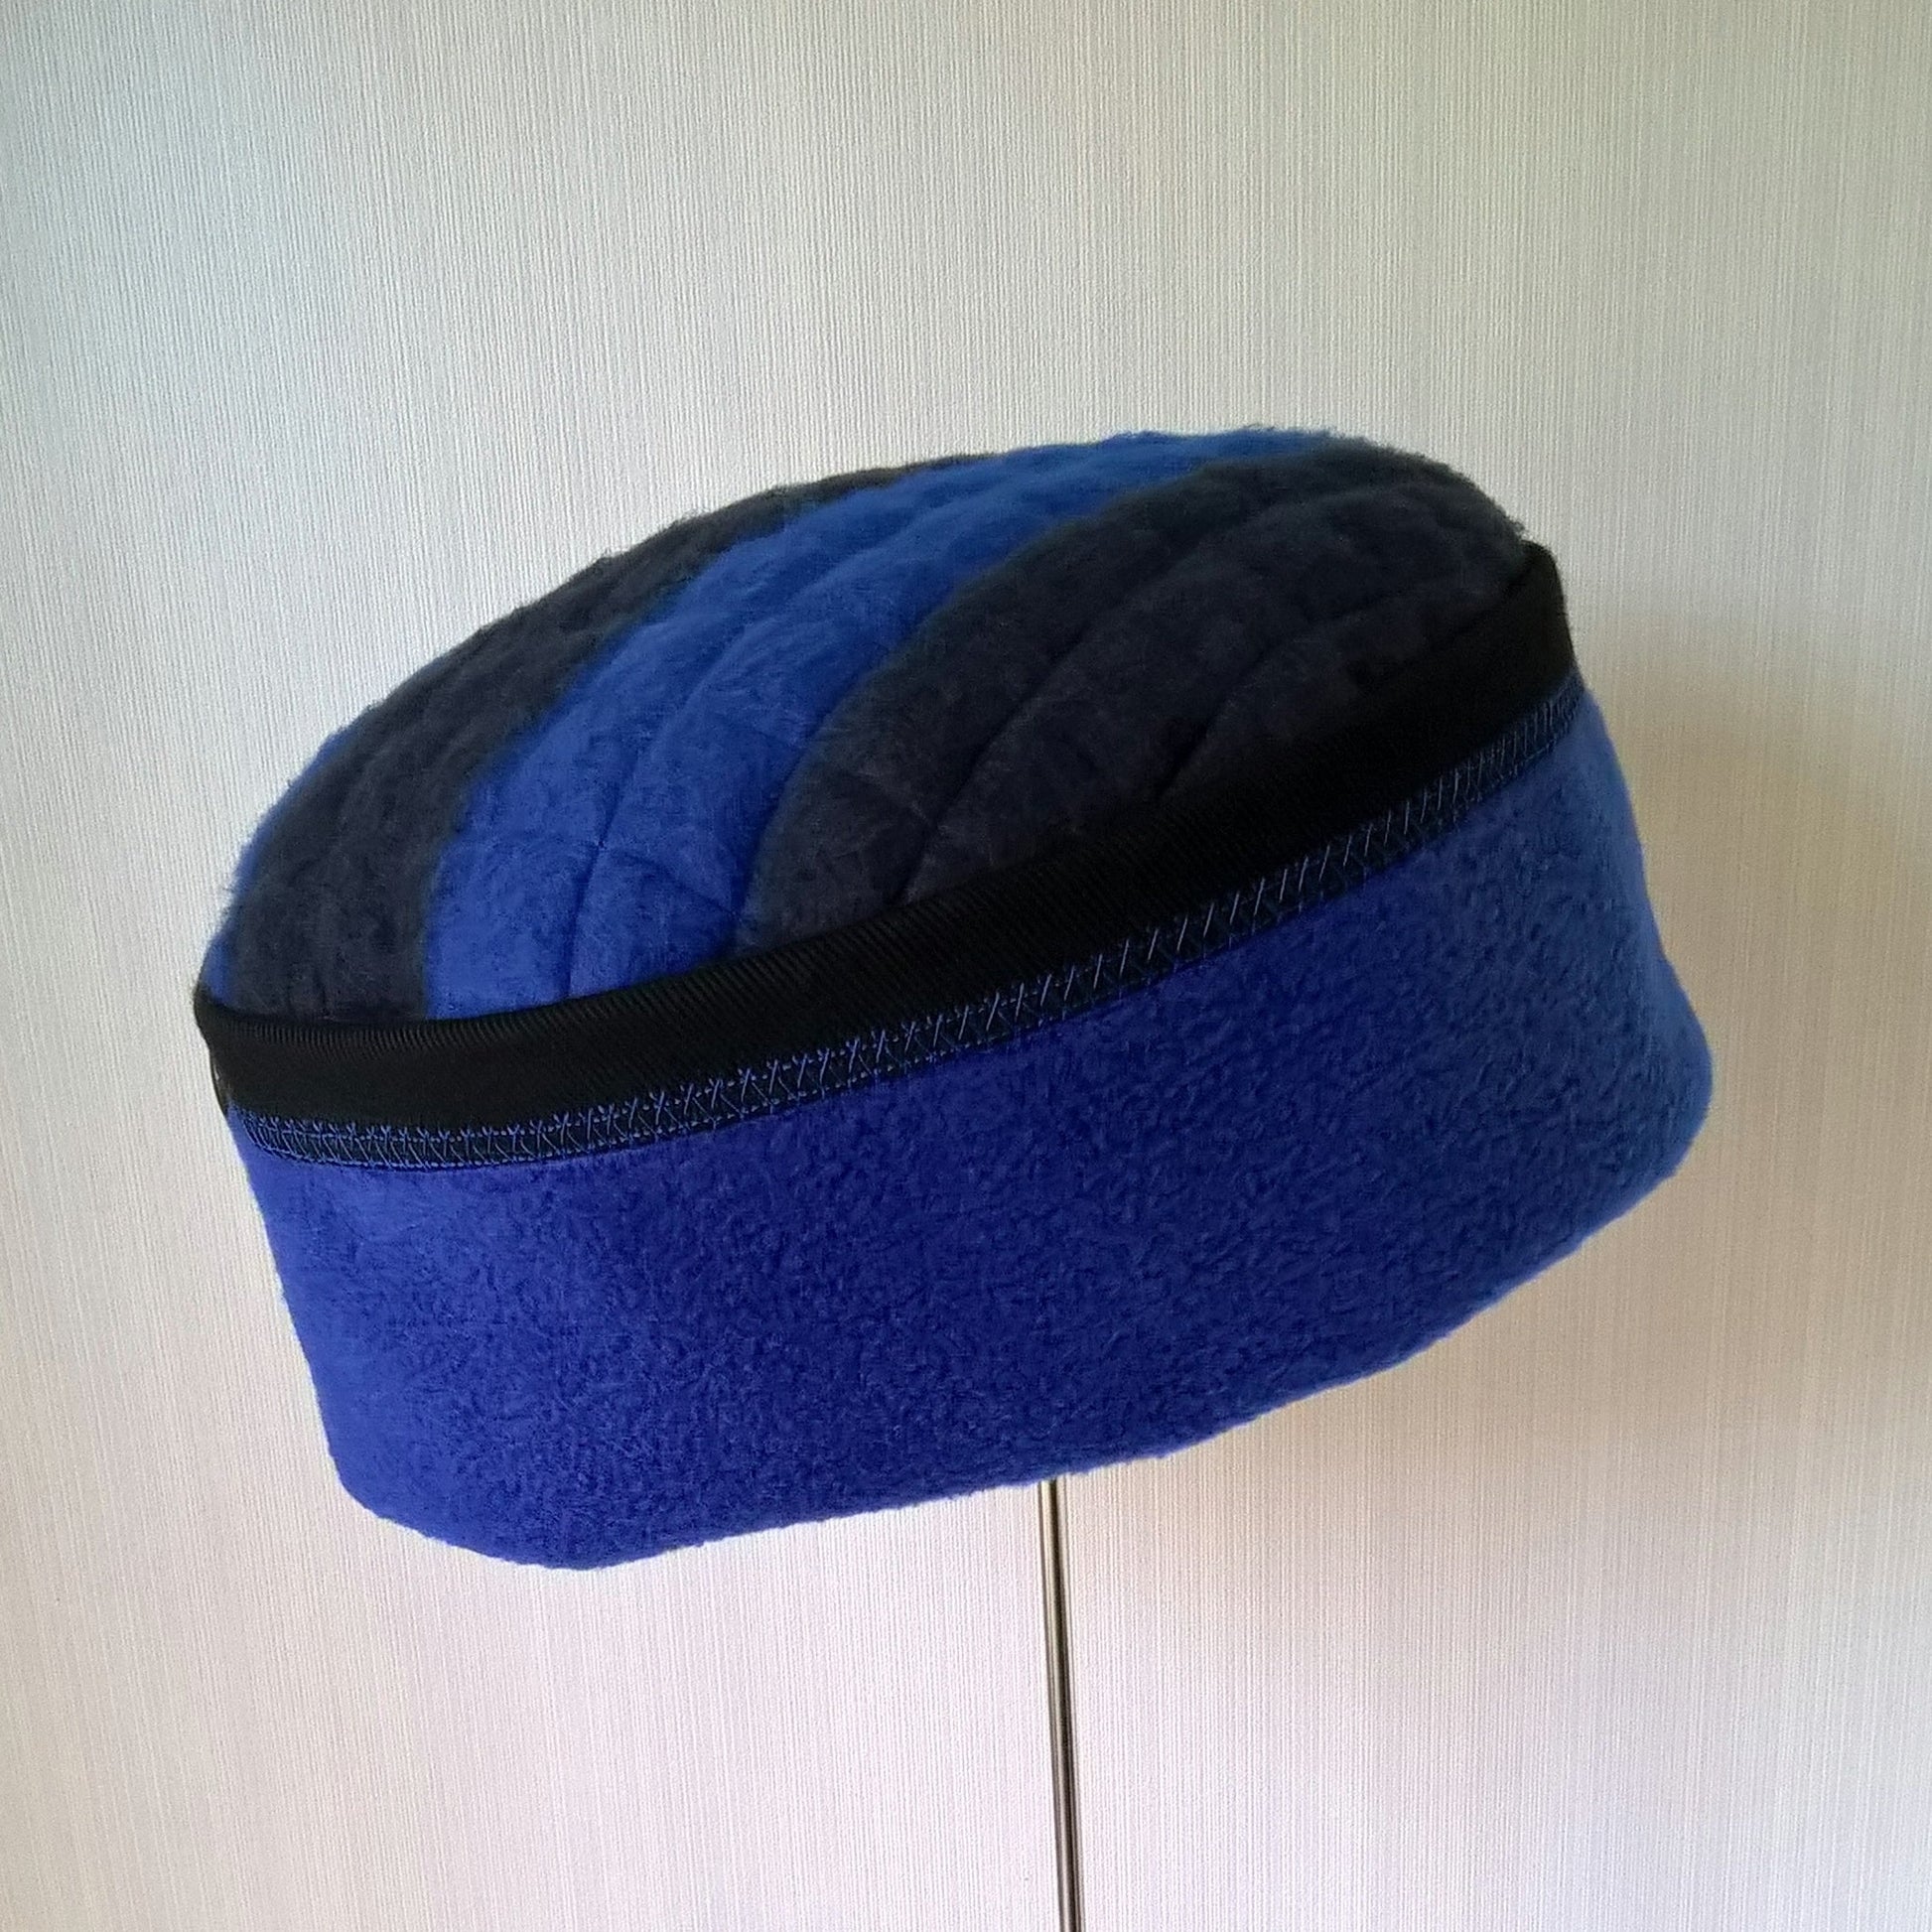 Pillbox shaped fleece hat in cobalt blue with black trim